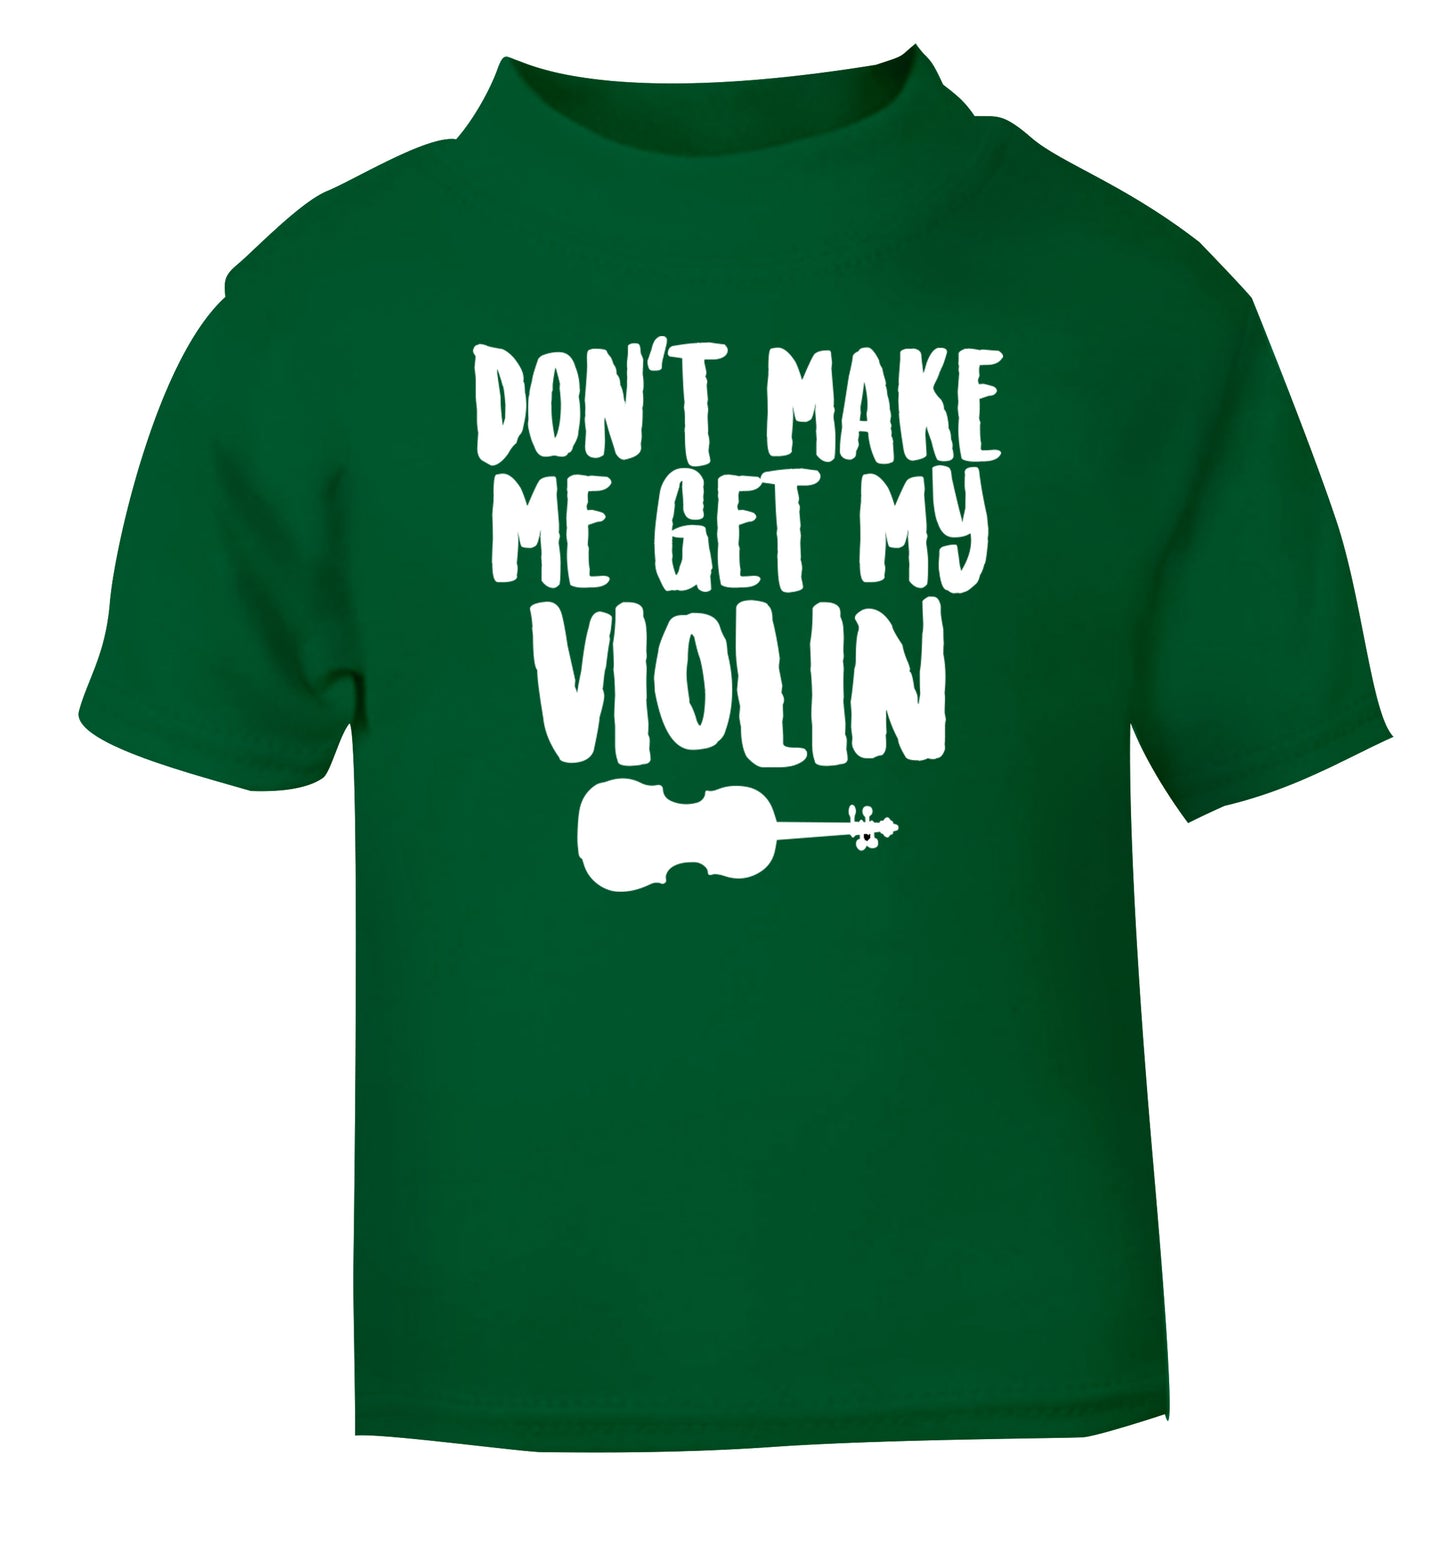 Don't make me get my violin green Baby Toddler Tshirt 2 Years